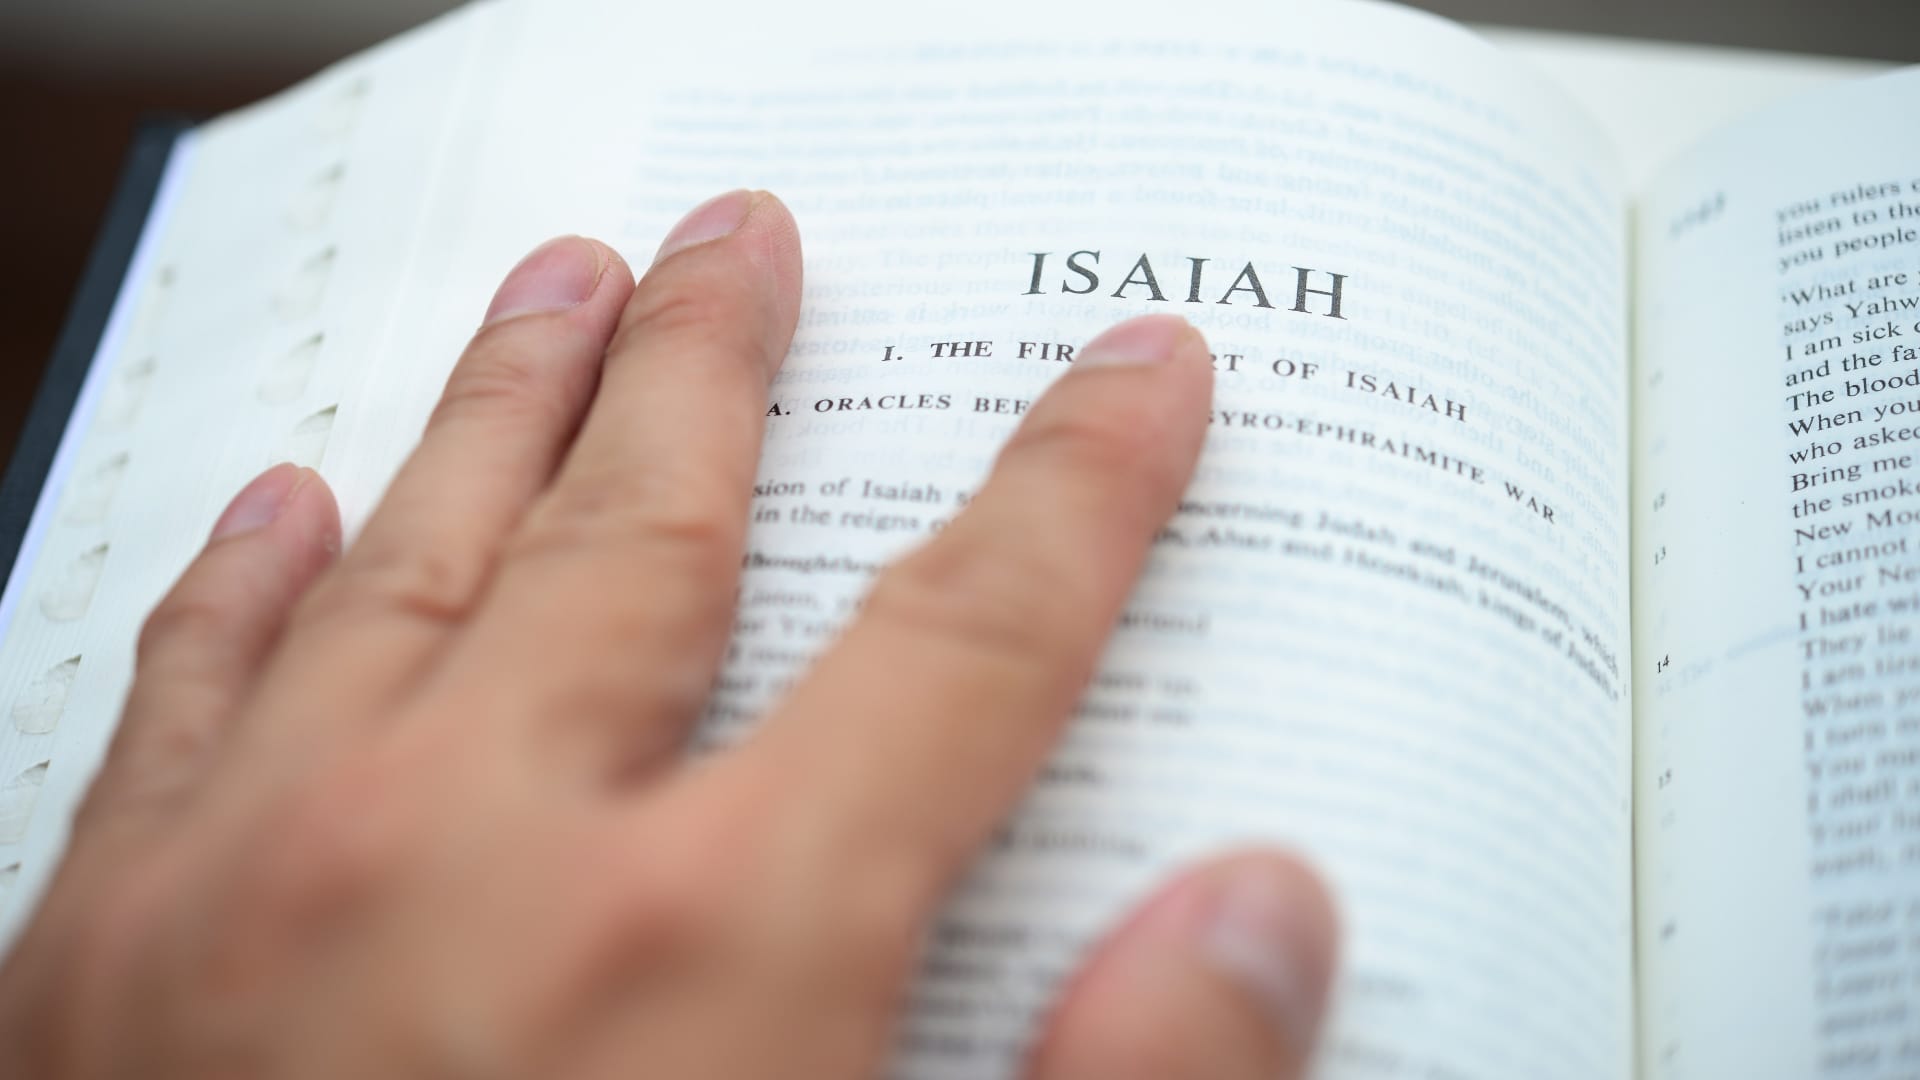 The Gospel According to Isaiah (Isaiah 40:1-11)